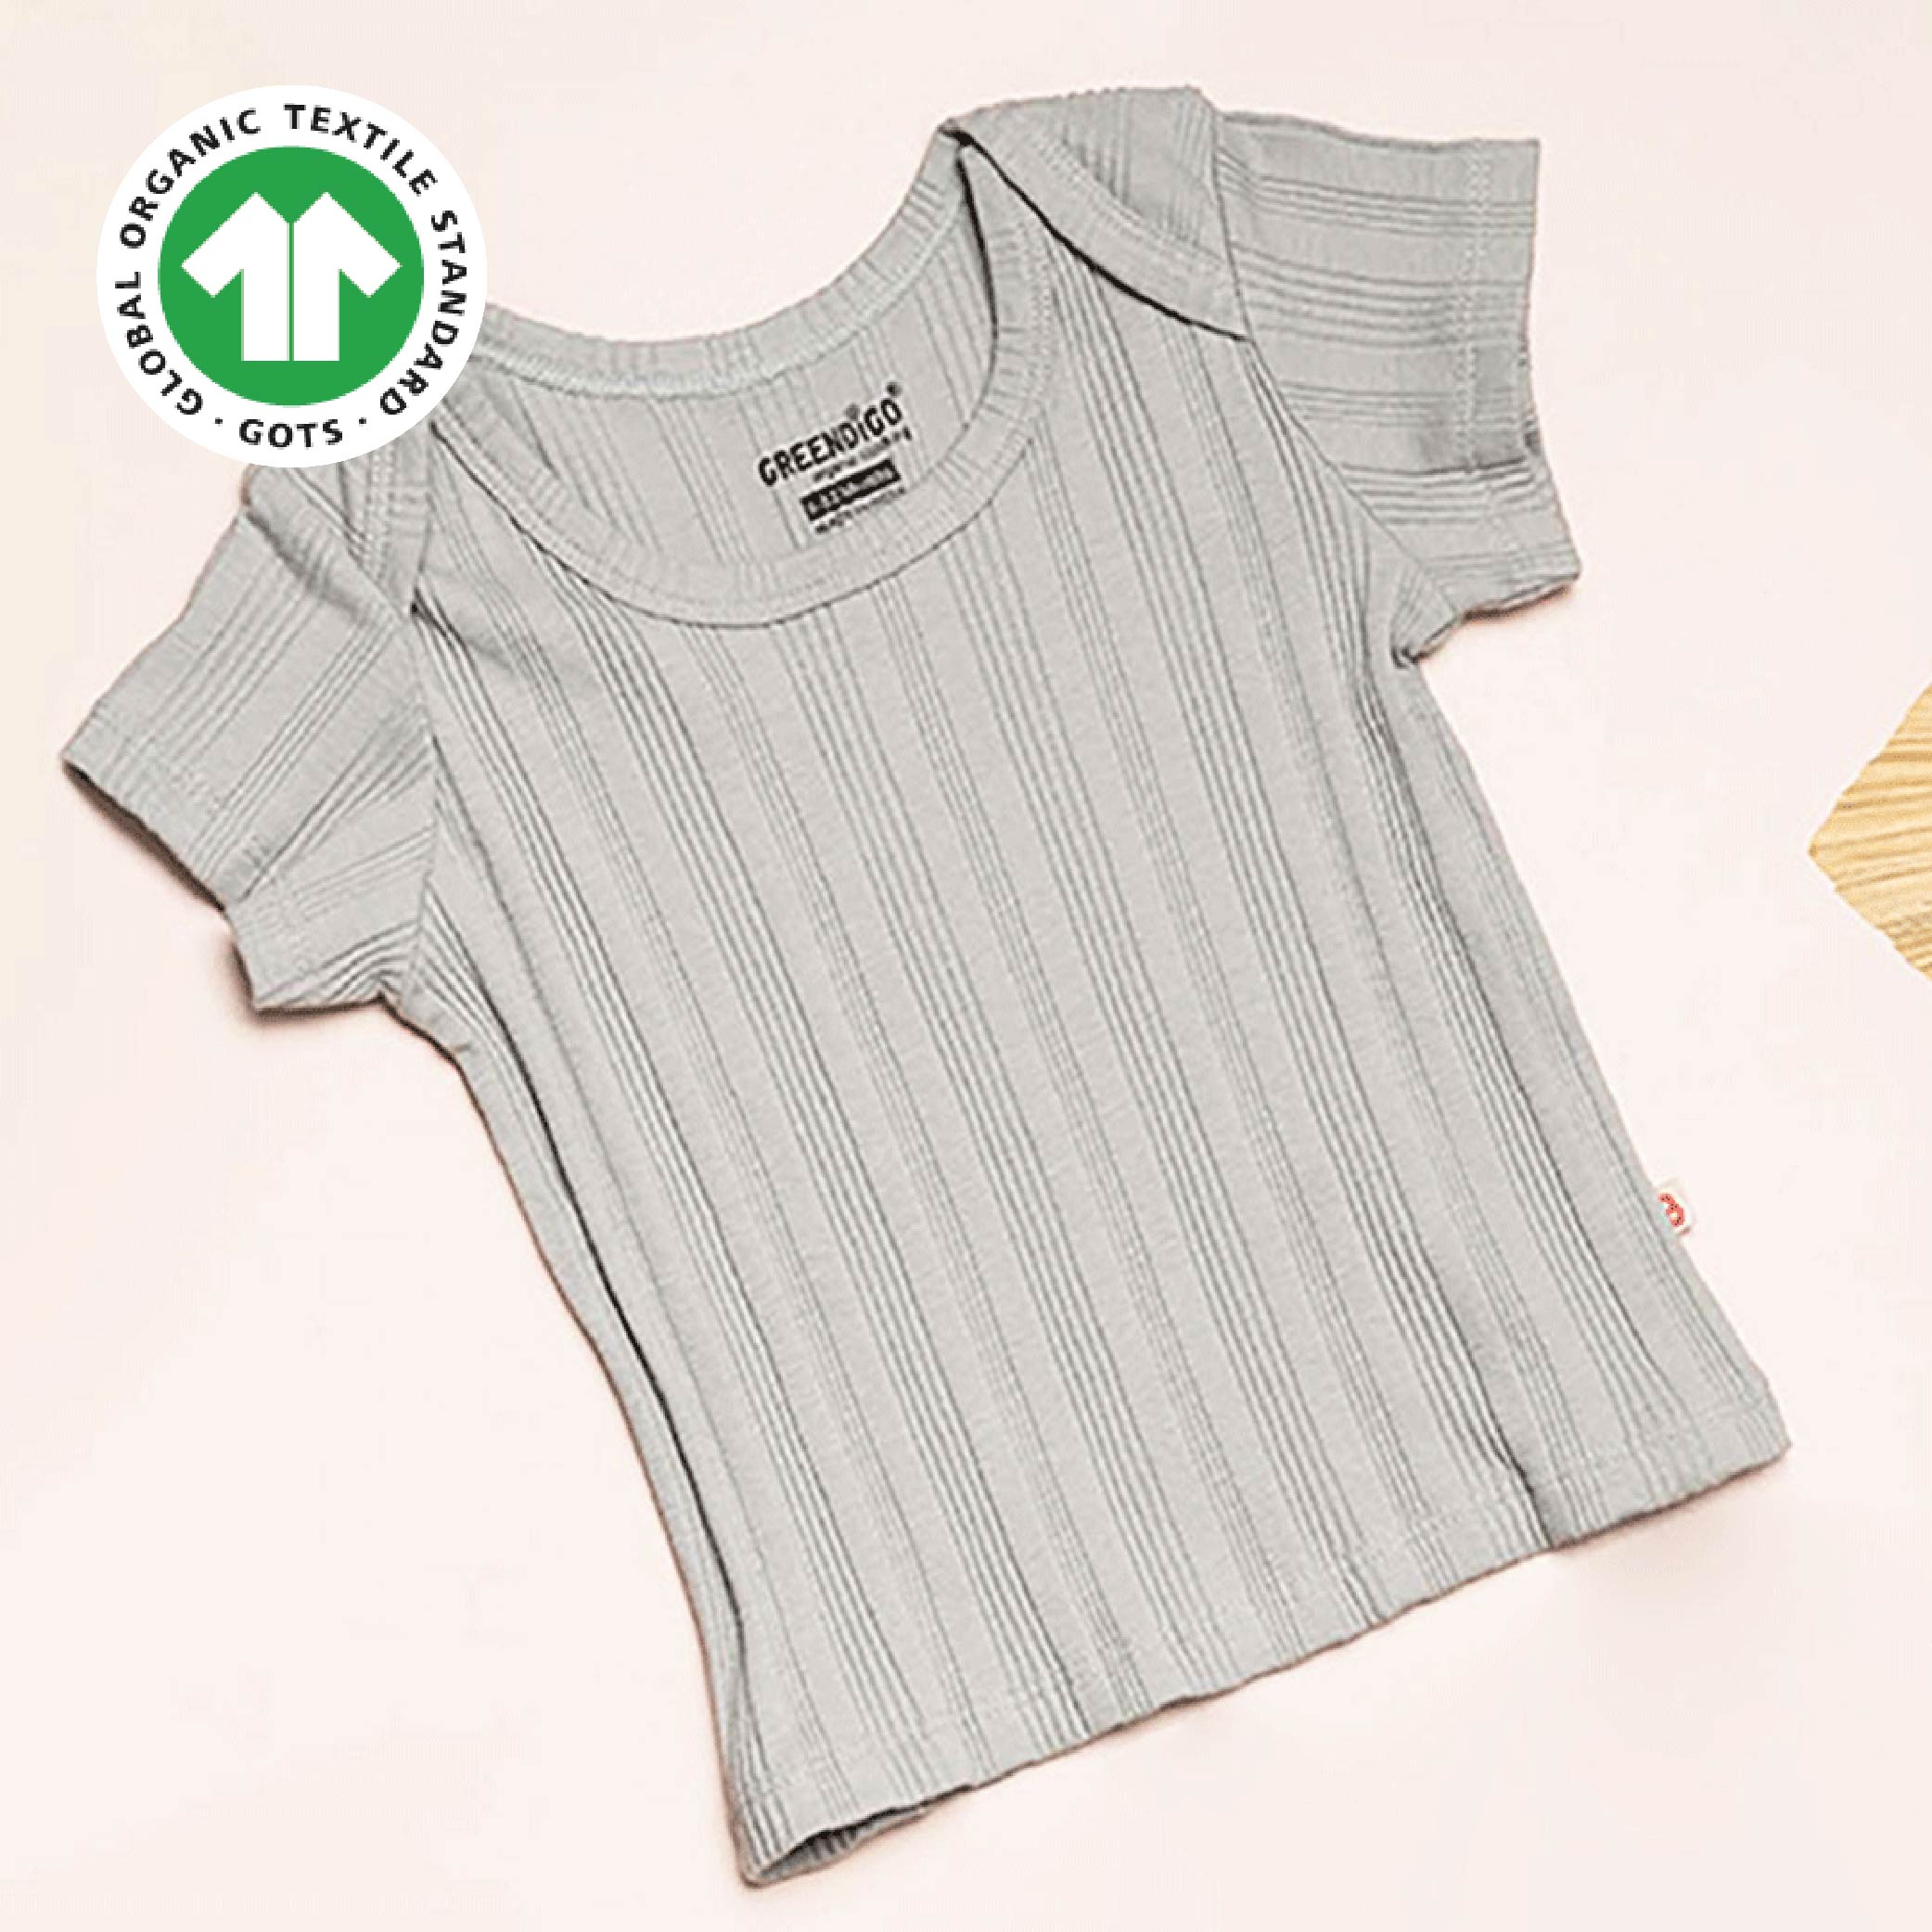 Greendigo 100% Organic Cotton Green Solid Tshirt/Top For New Born Baby Boys And Baby Girls